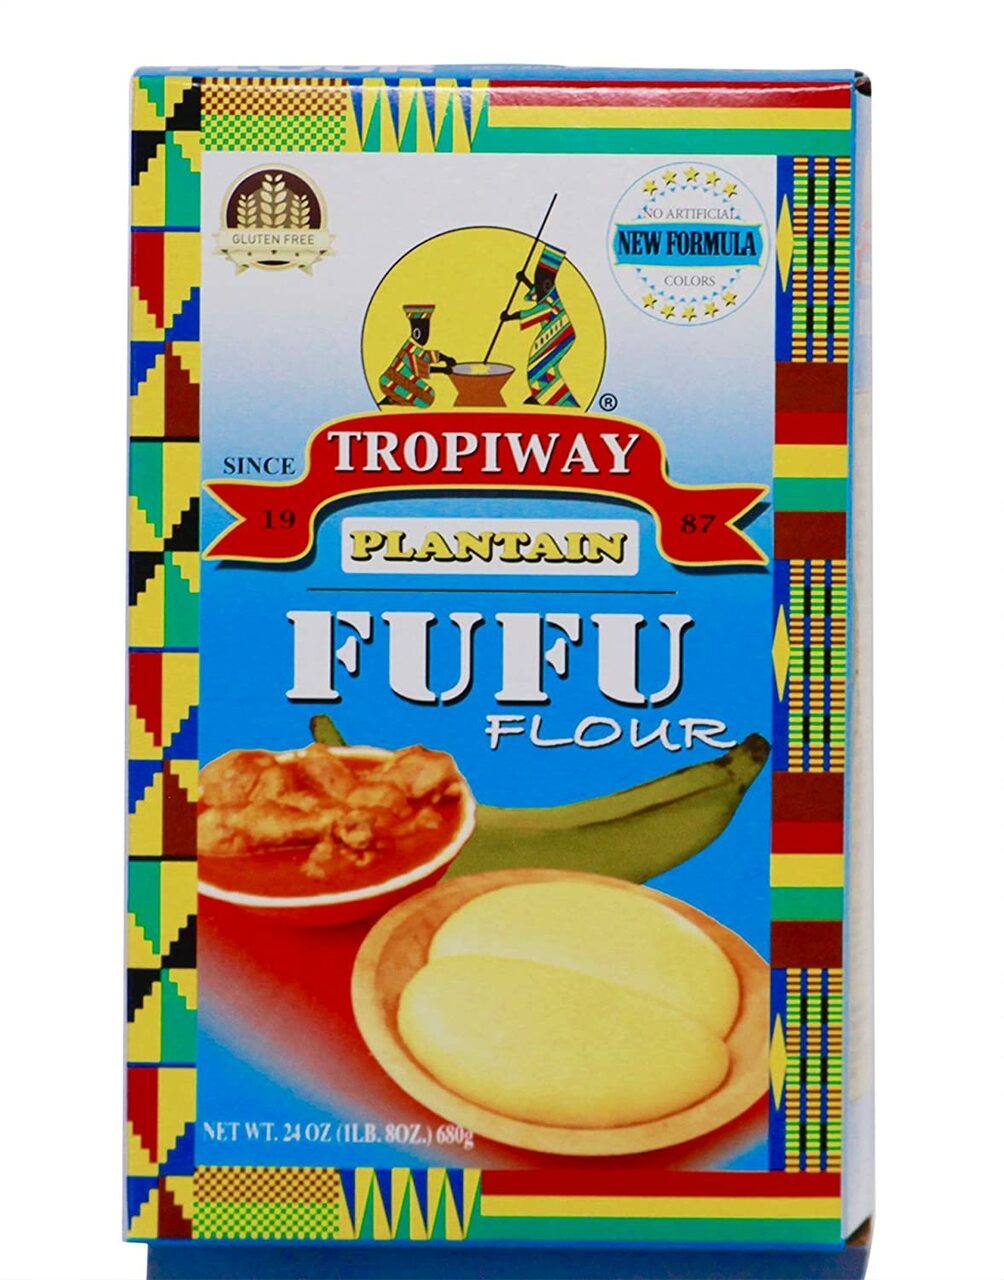 Fufu Flour 680g Box of 6